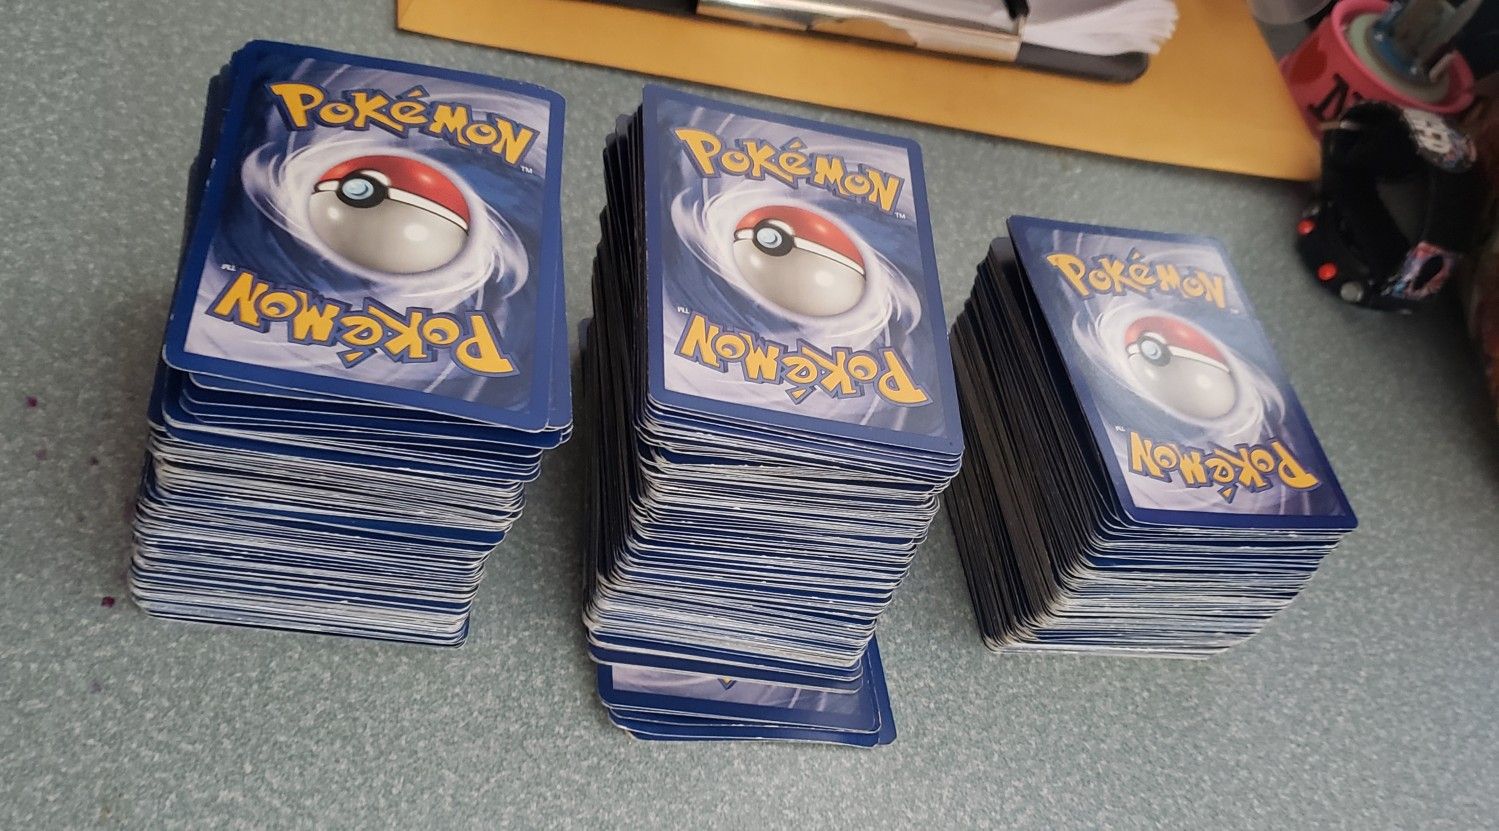 436 Pokemon cards